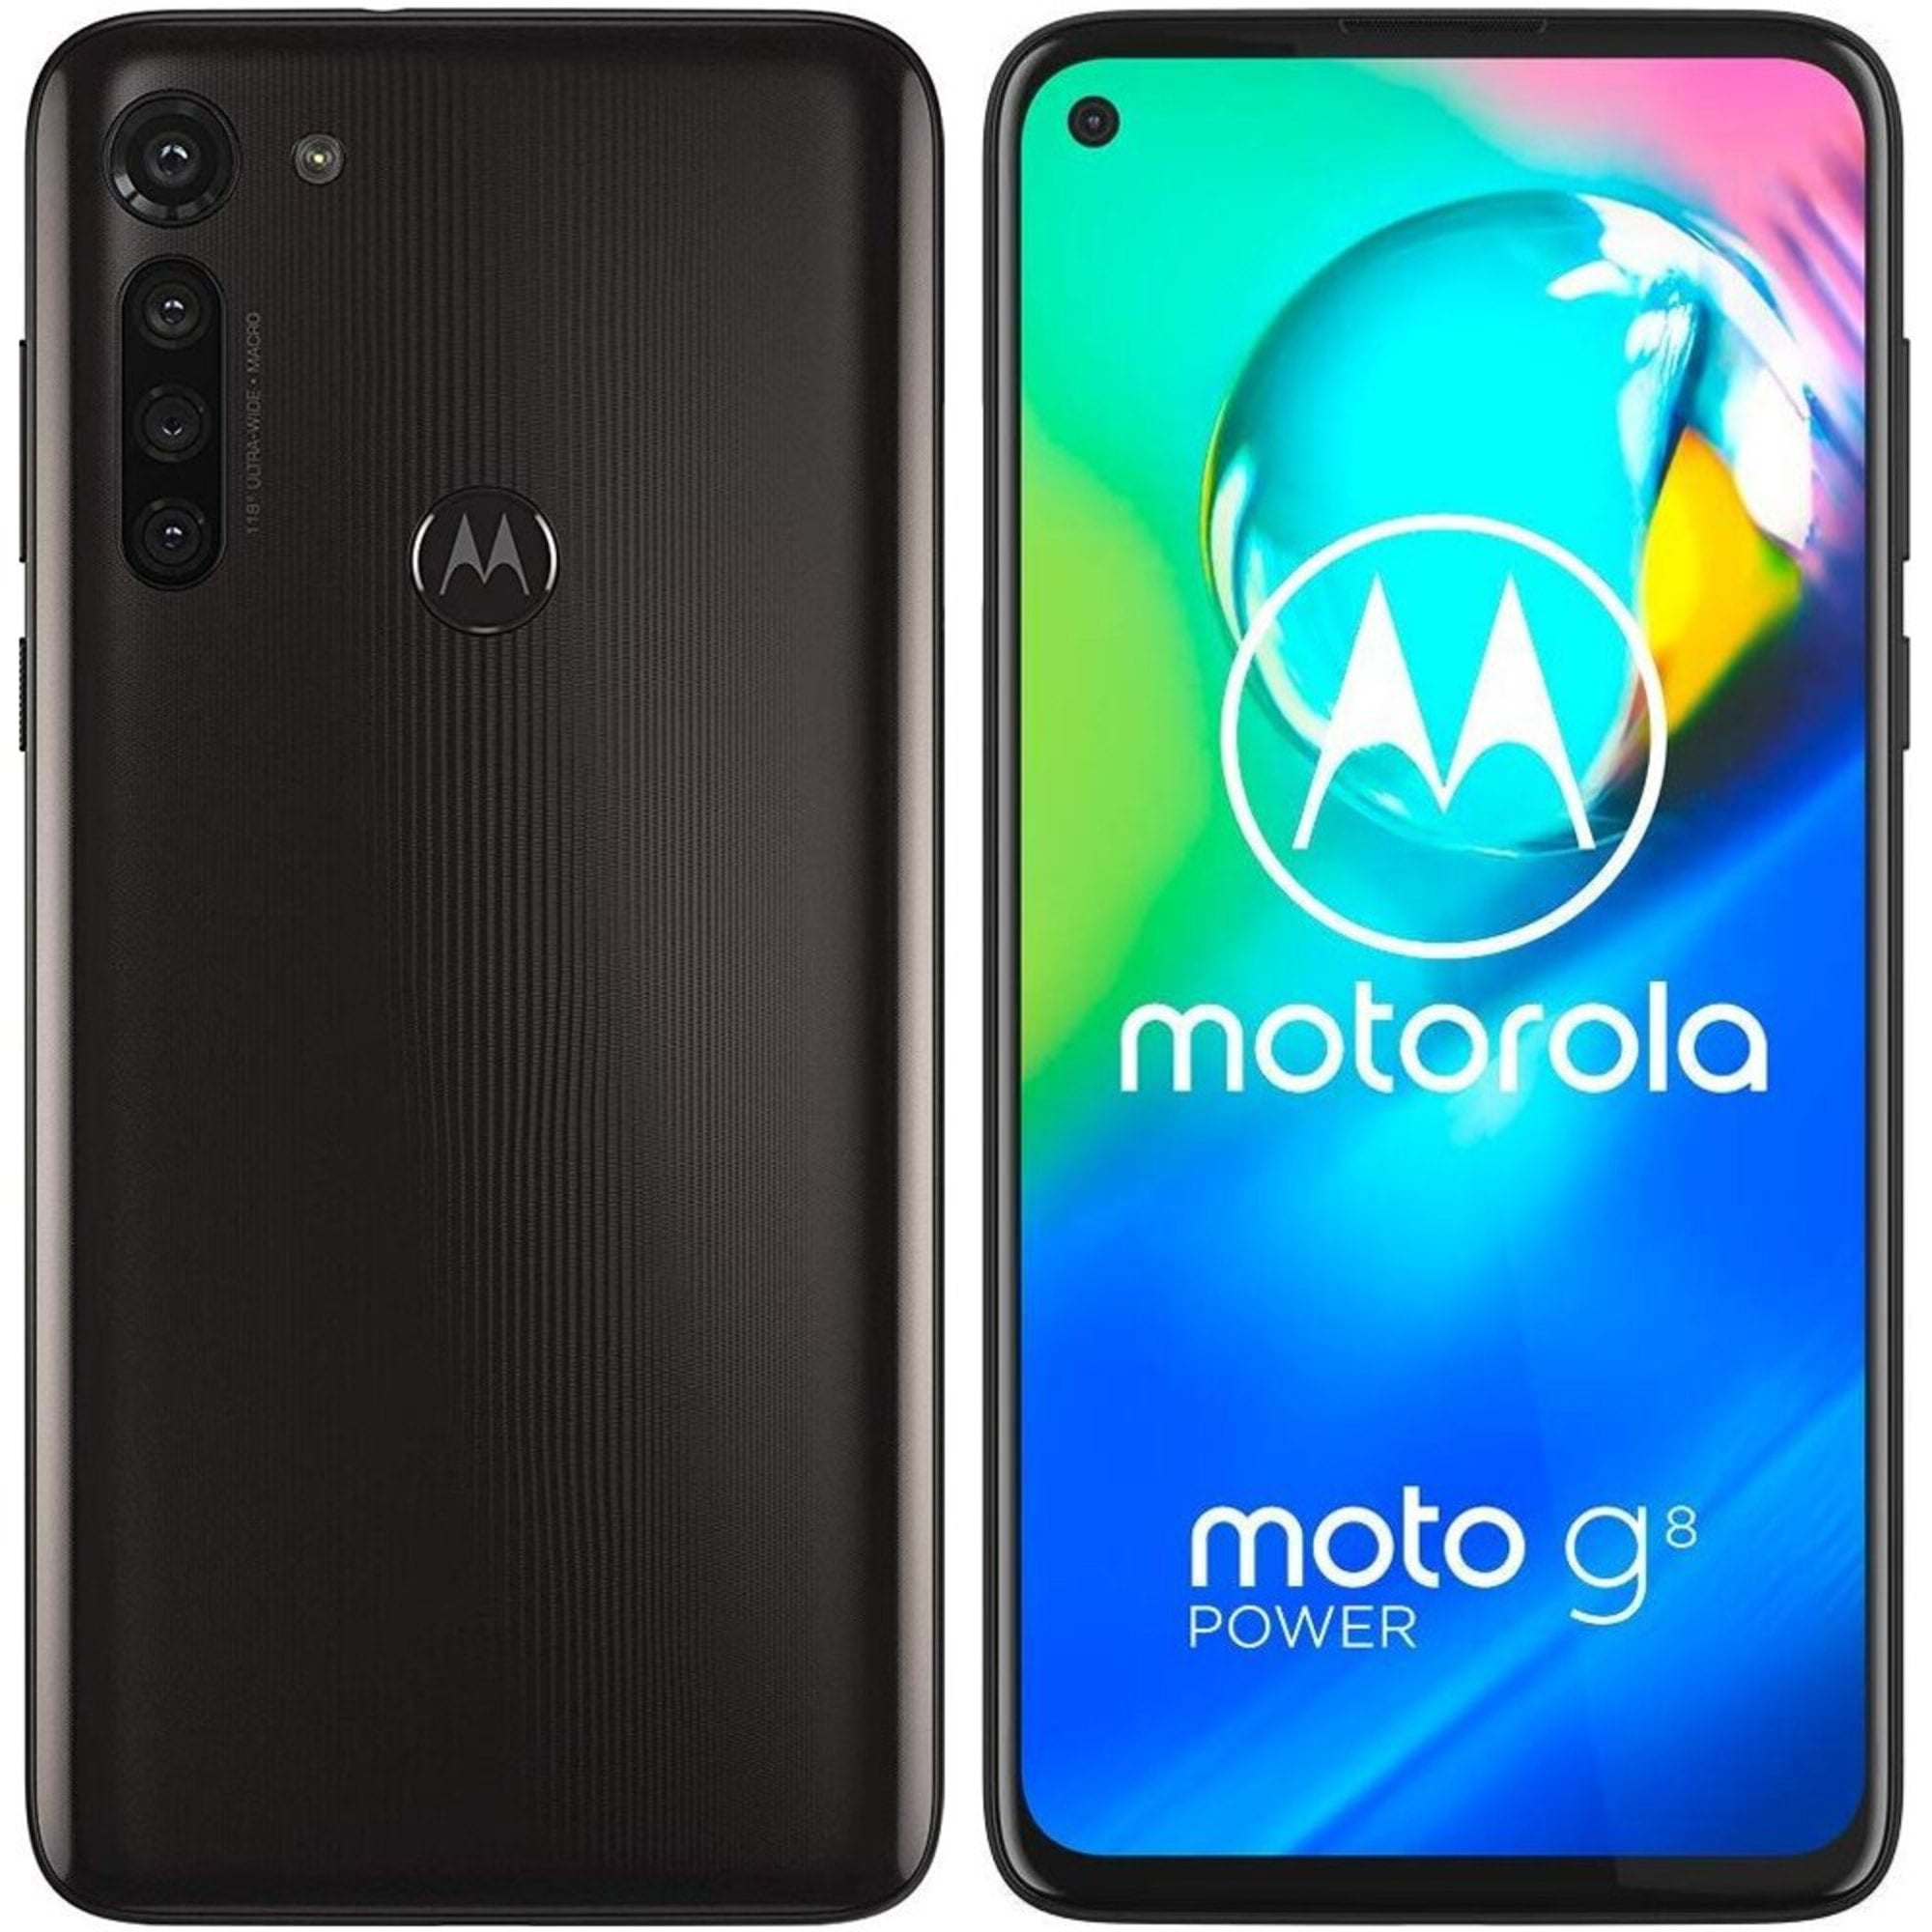 voorbeeld Doe herleven Scharnier Restored Motorola Moto G8 Power XT2041-1 64GB Hybrid Dual SIM GSM Unlocked  Android SmartPhone - Smoke Black (Refurbished) - Walmart.com